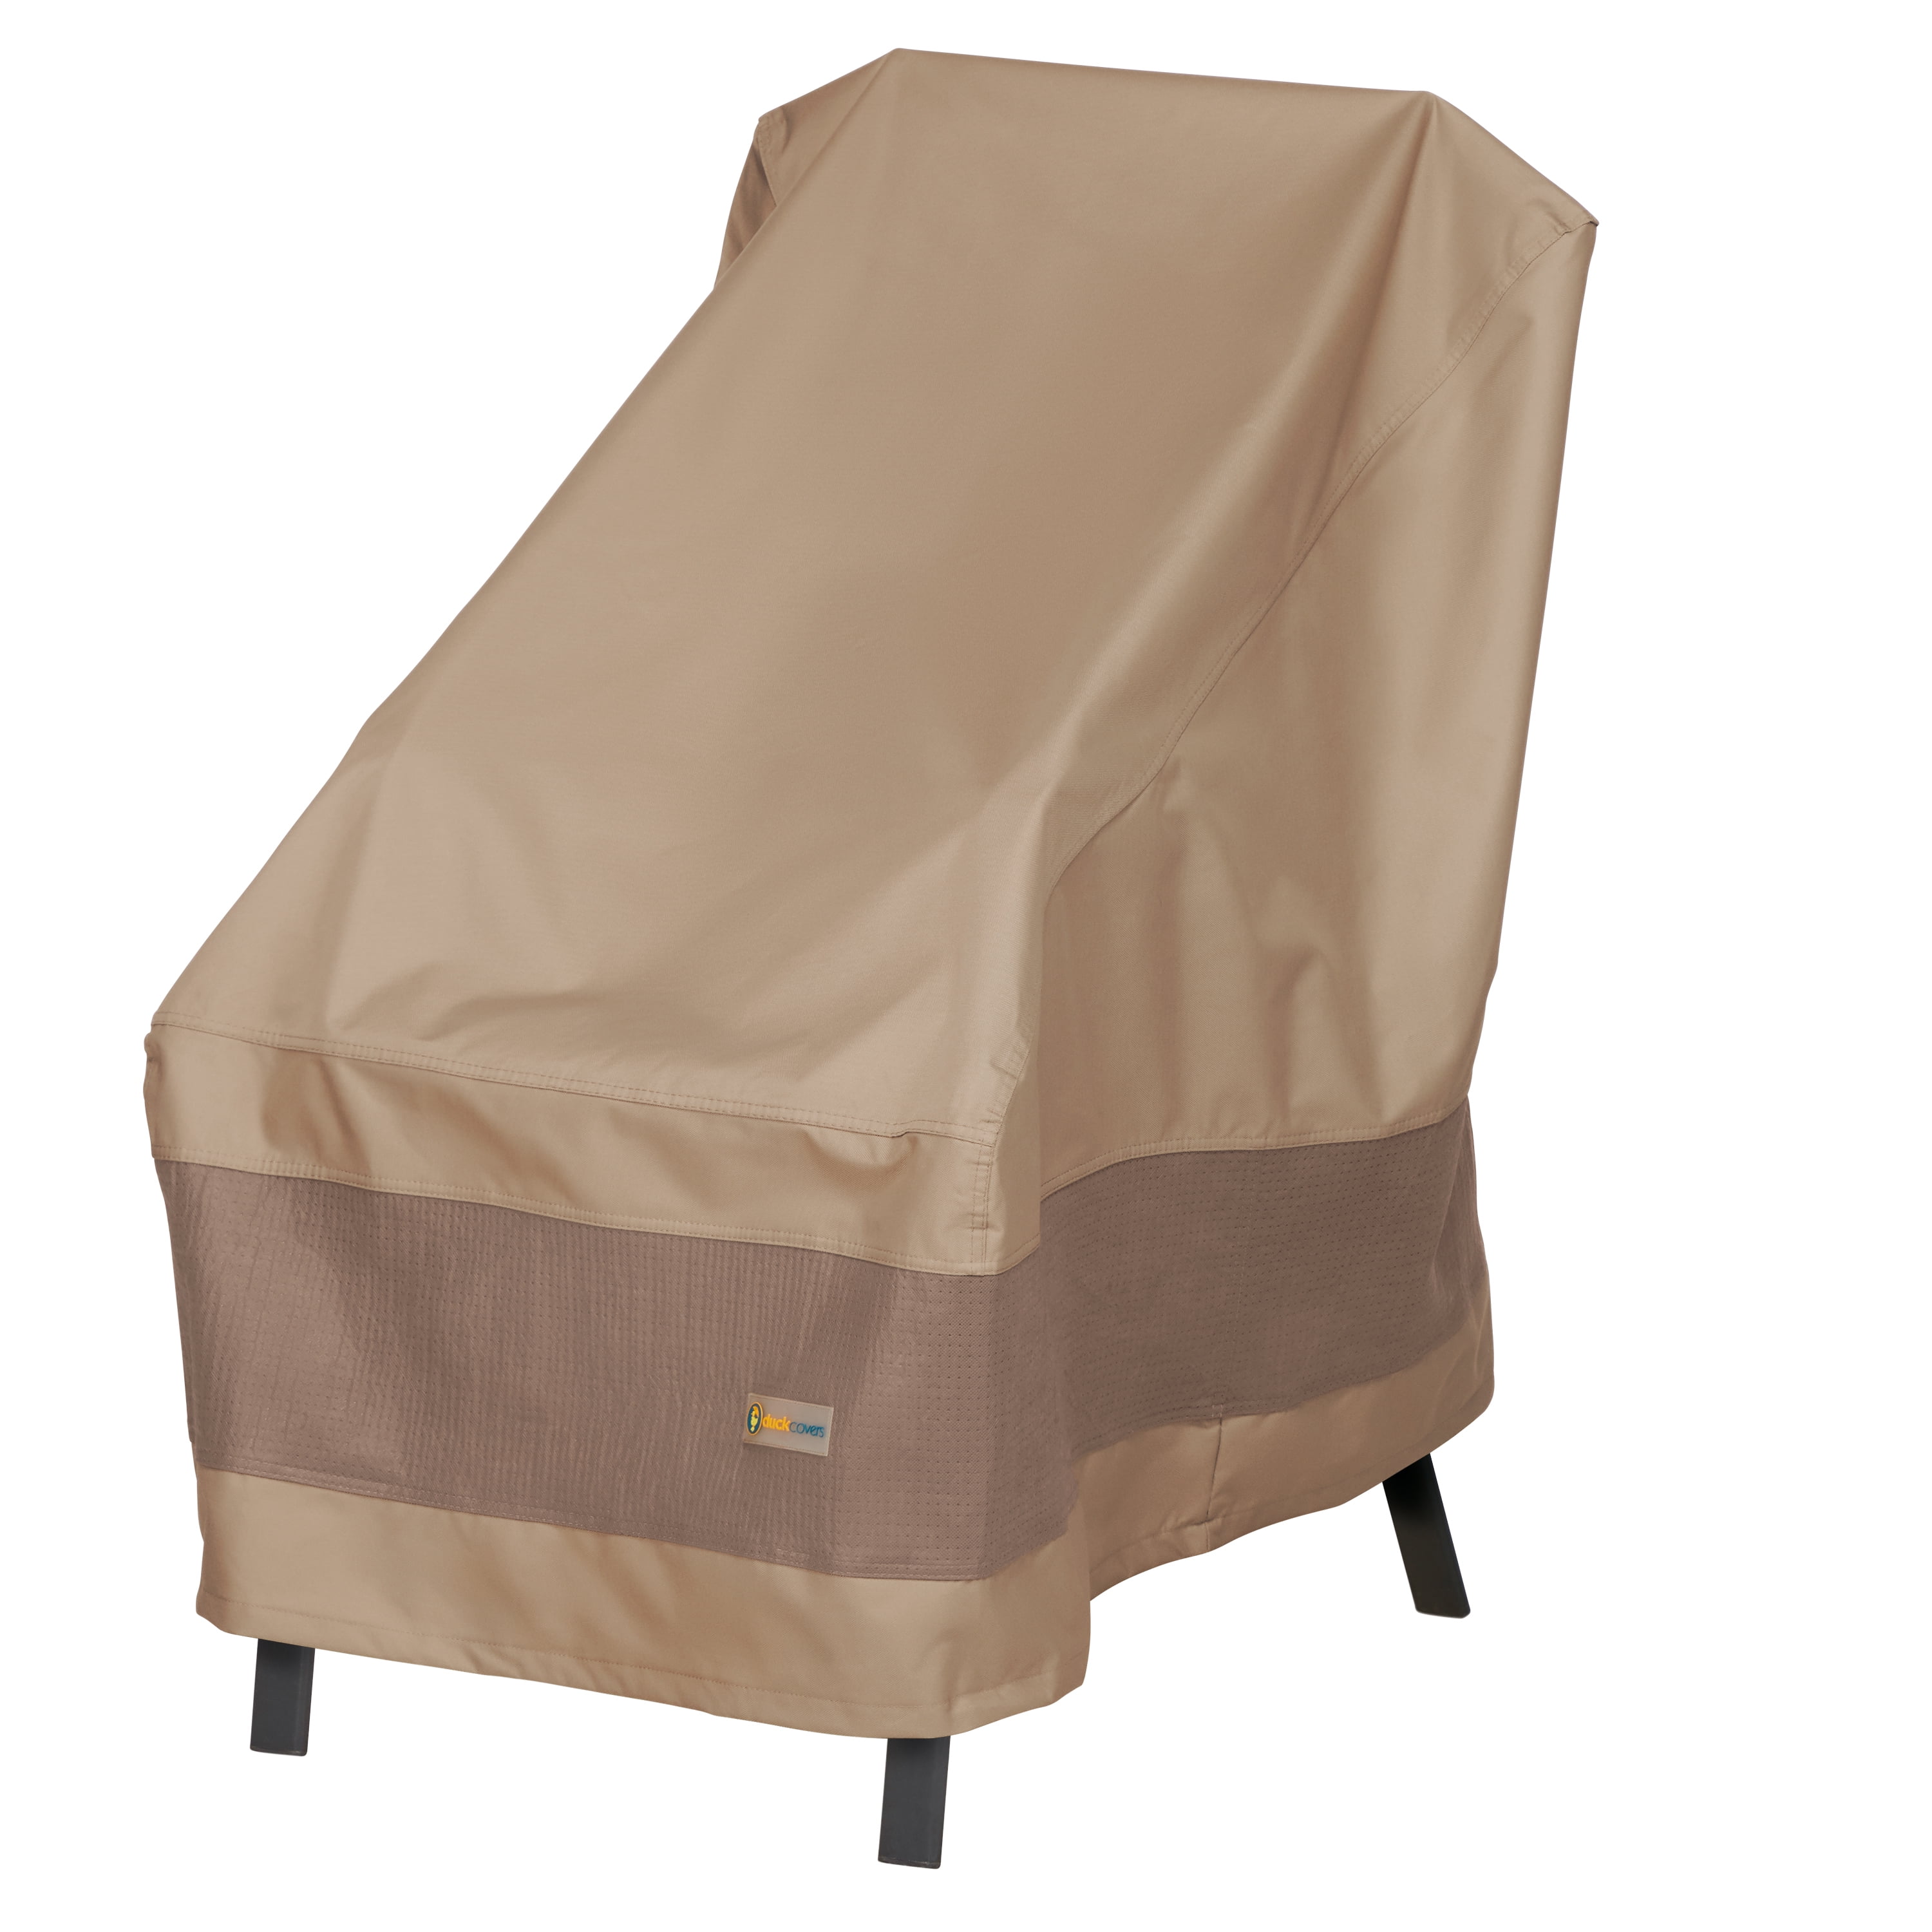 Duck Covers Elegant Waterproof 26 Inch High Back Chair Cover - Walmart